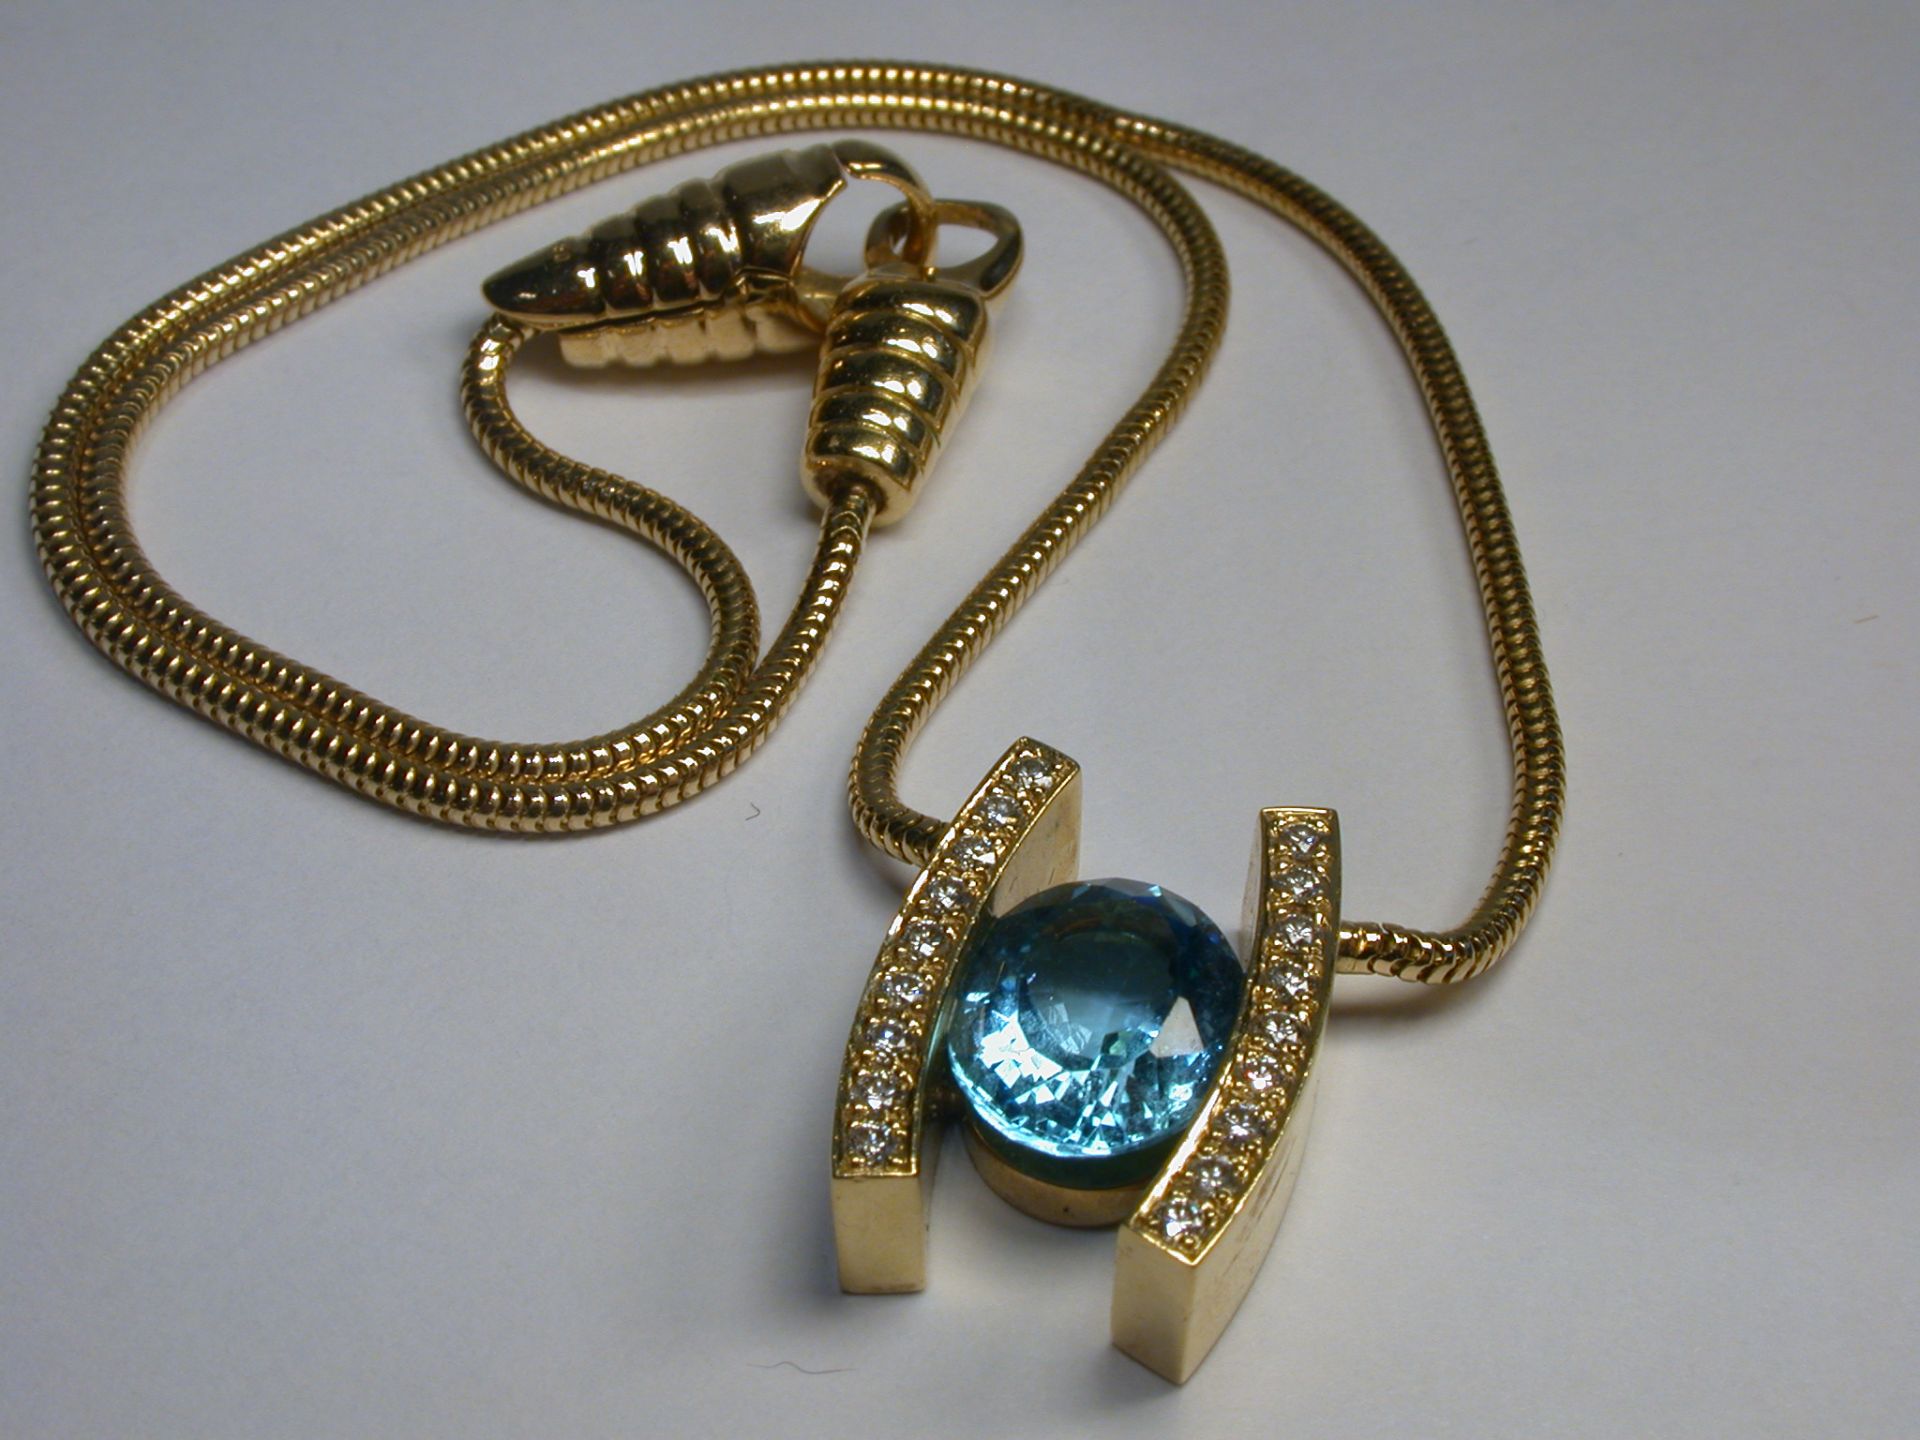 Collier GG 750, Diamanten ca. 0,54 ct, Blautopas - 33,57 Gramm